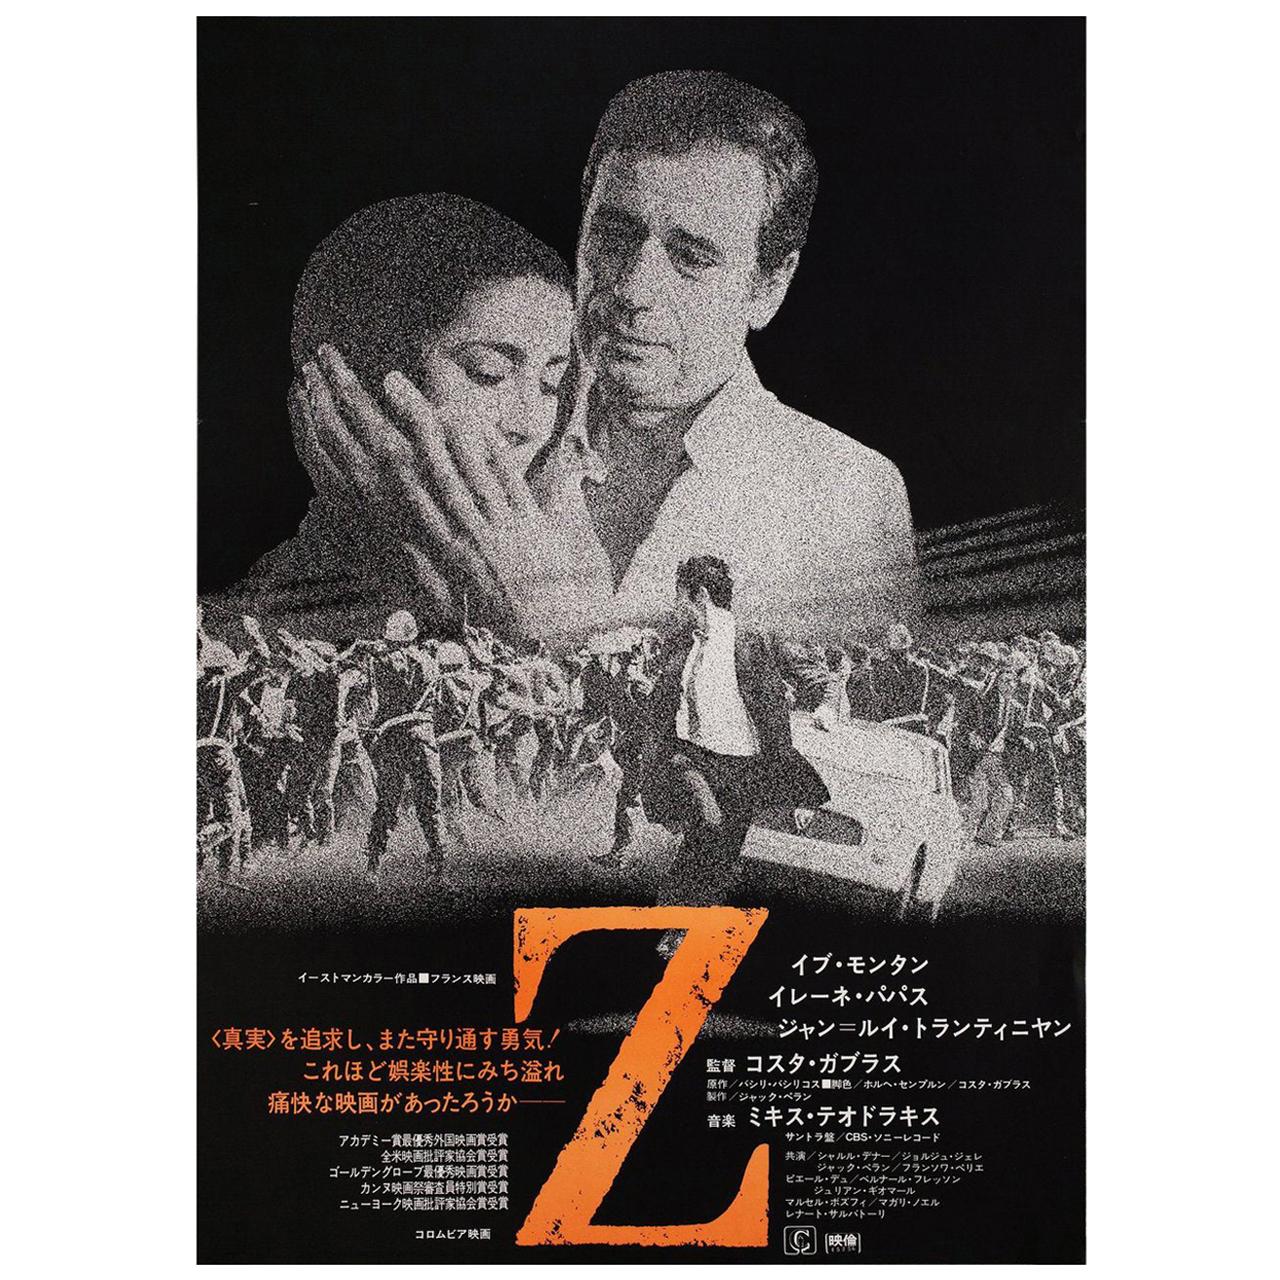 Berserk! Movie Poster 1968 Japanese 1 Panel (20x29)